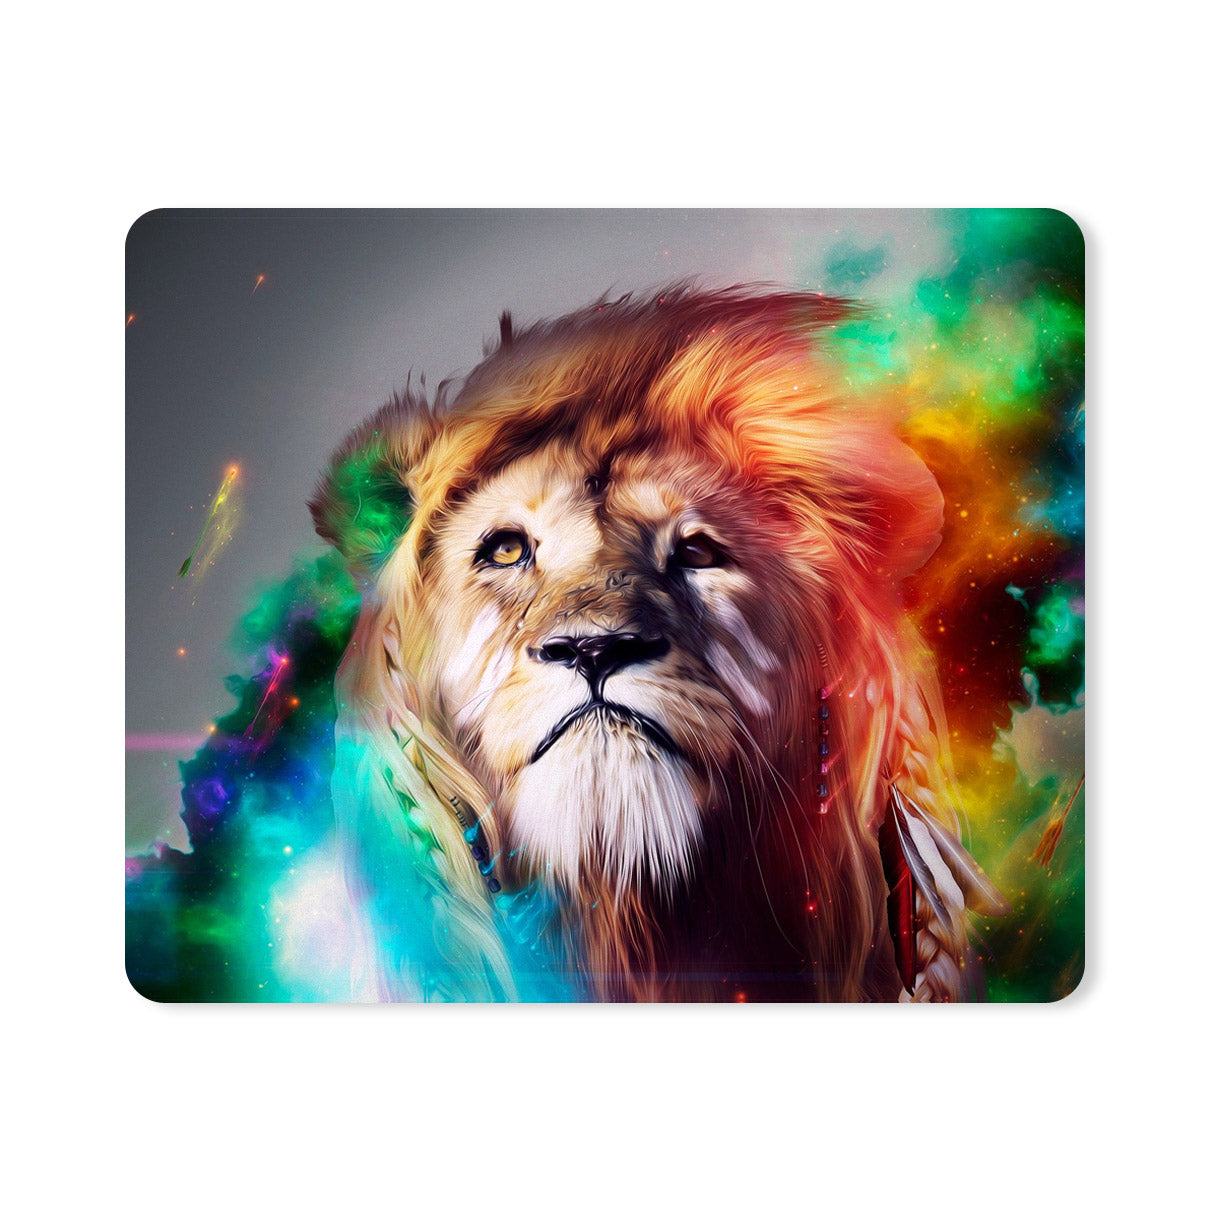 Colorful Lion Designer Printed Premium Mouse pad (9 in x 7.5 in)